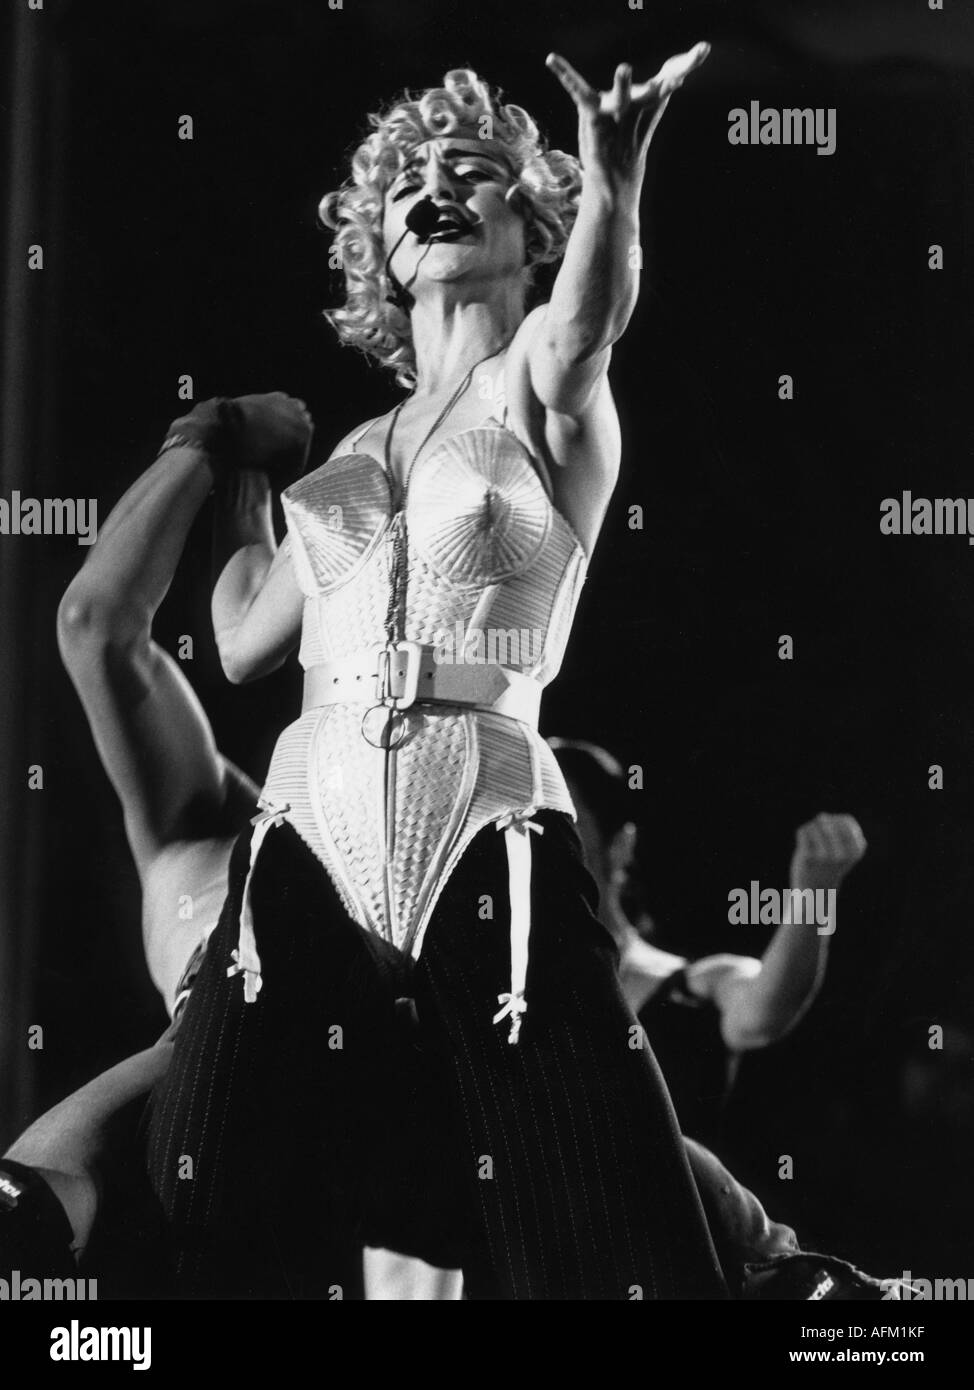 Madonna, * 16.6.1958, musicista/artista statunitense, cantante, gig, Reitstadion Riem, vicino Monaco, Germania, 16.7.1990, Foto Stock